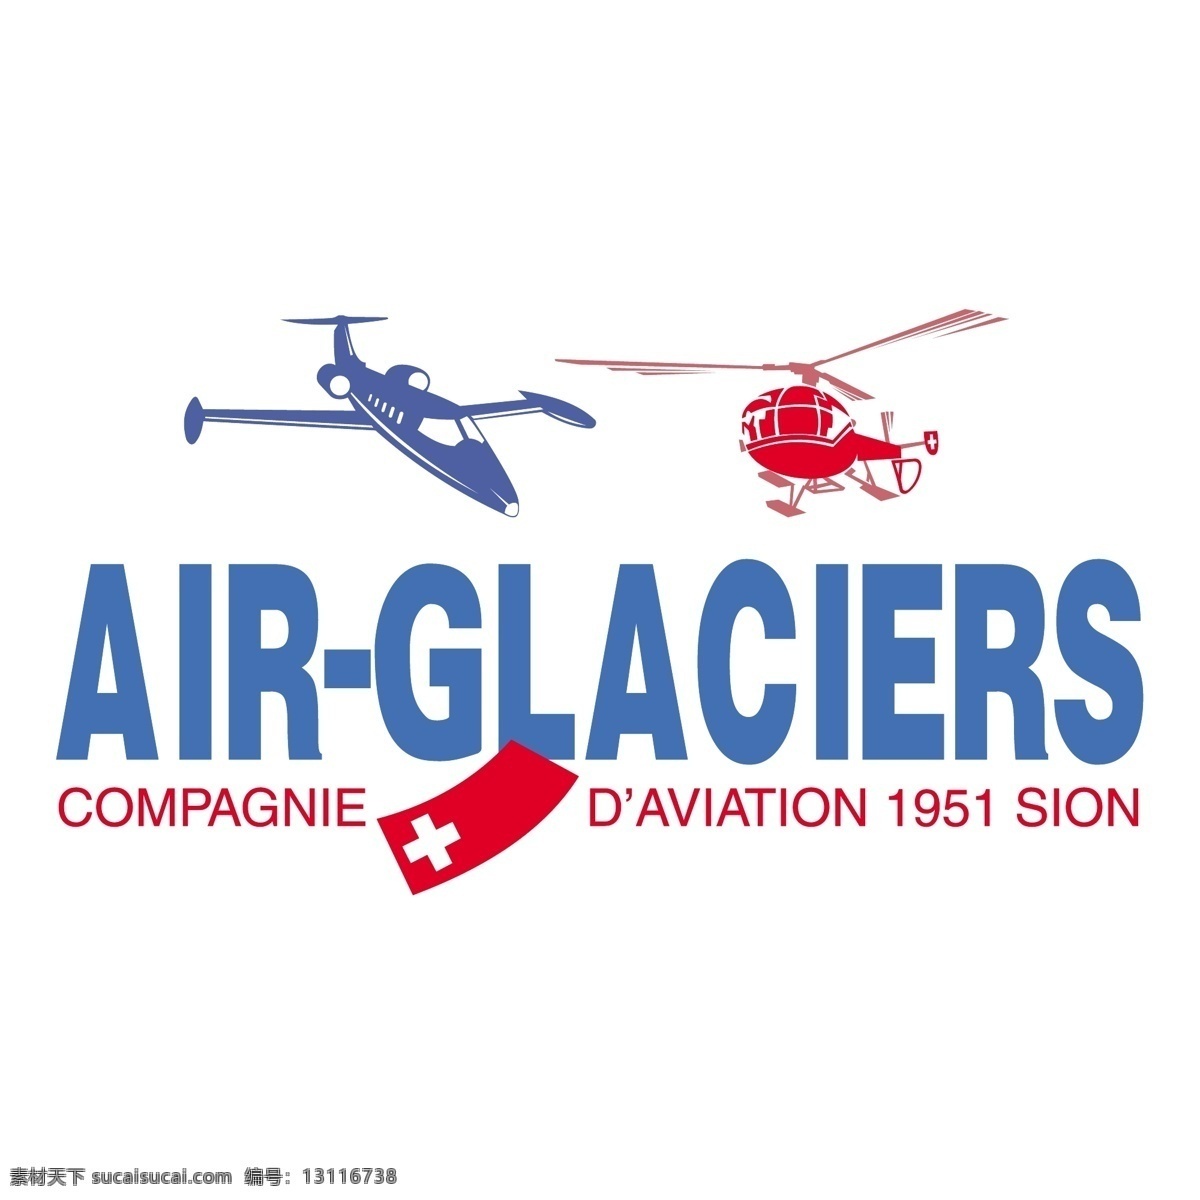 logo 标识 标识标志图标 标志 企业logo 企业 airglaciers 航空公司 航空标识 矢量 矢量图